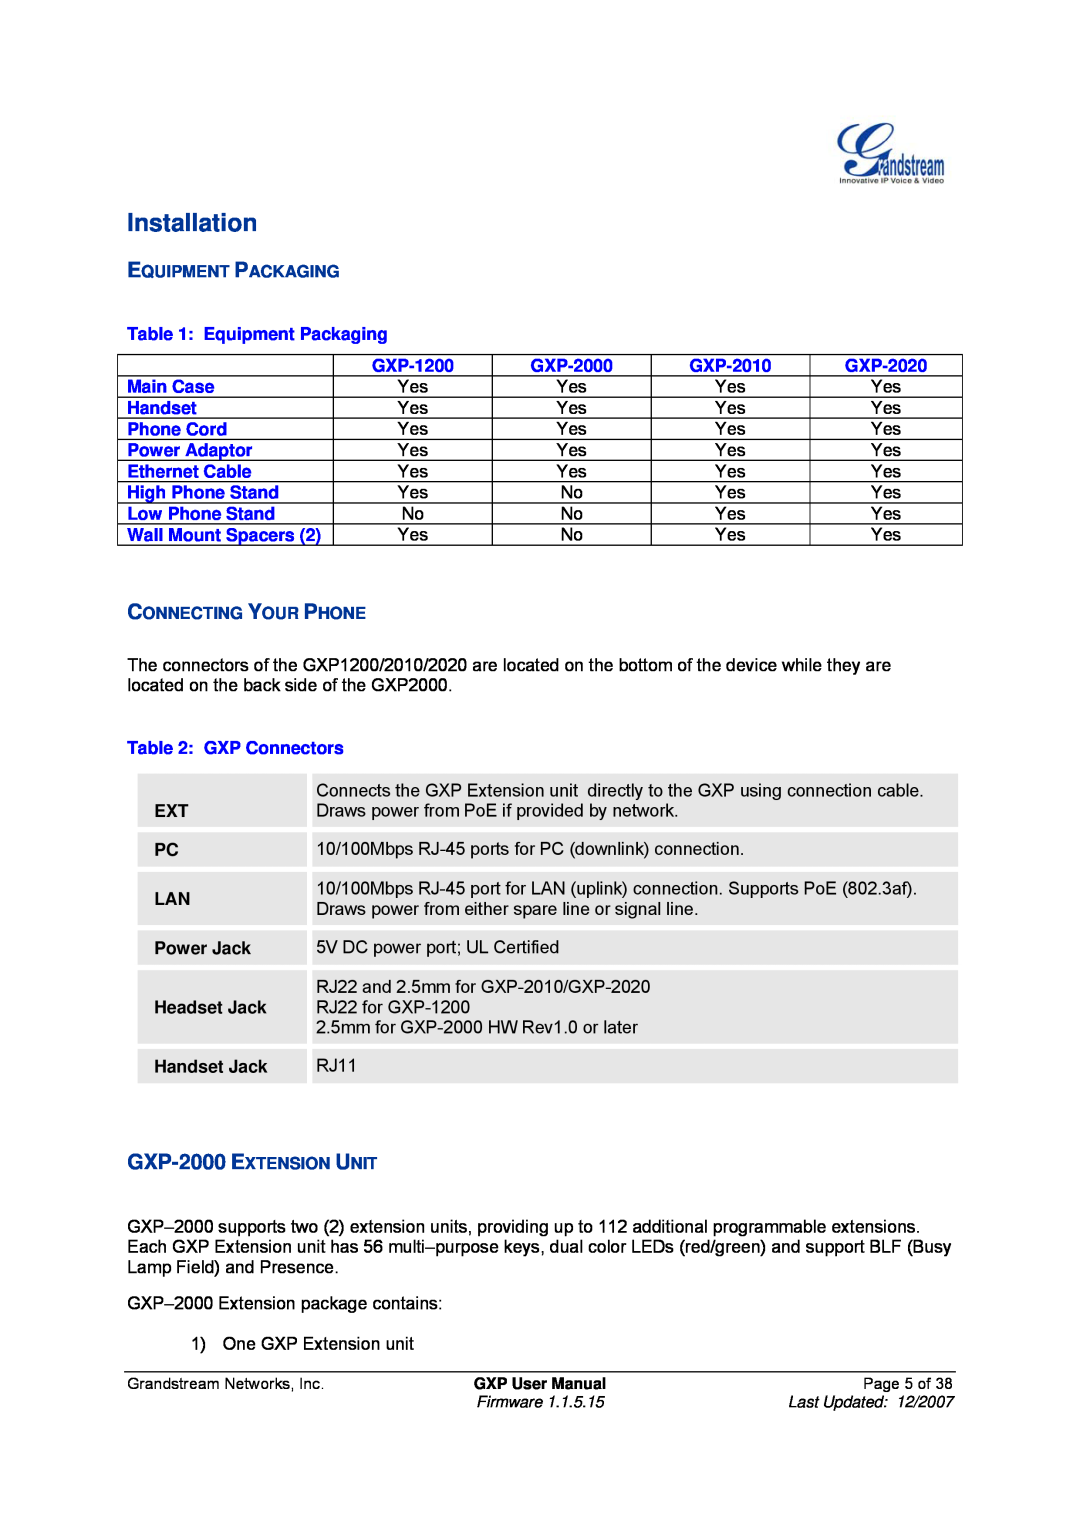 Grandstream Networks GXP-1200, GXP-2010 manual Installation 